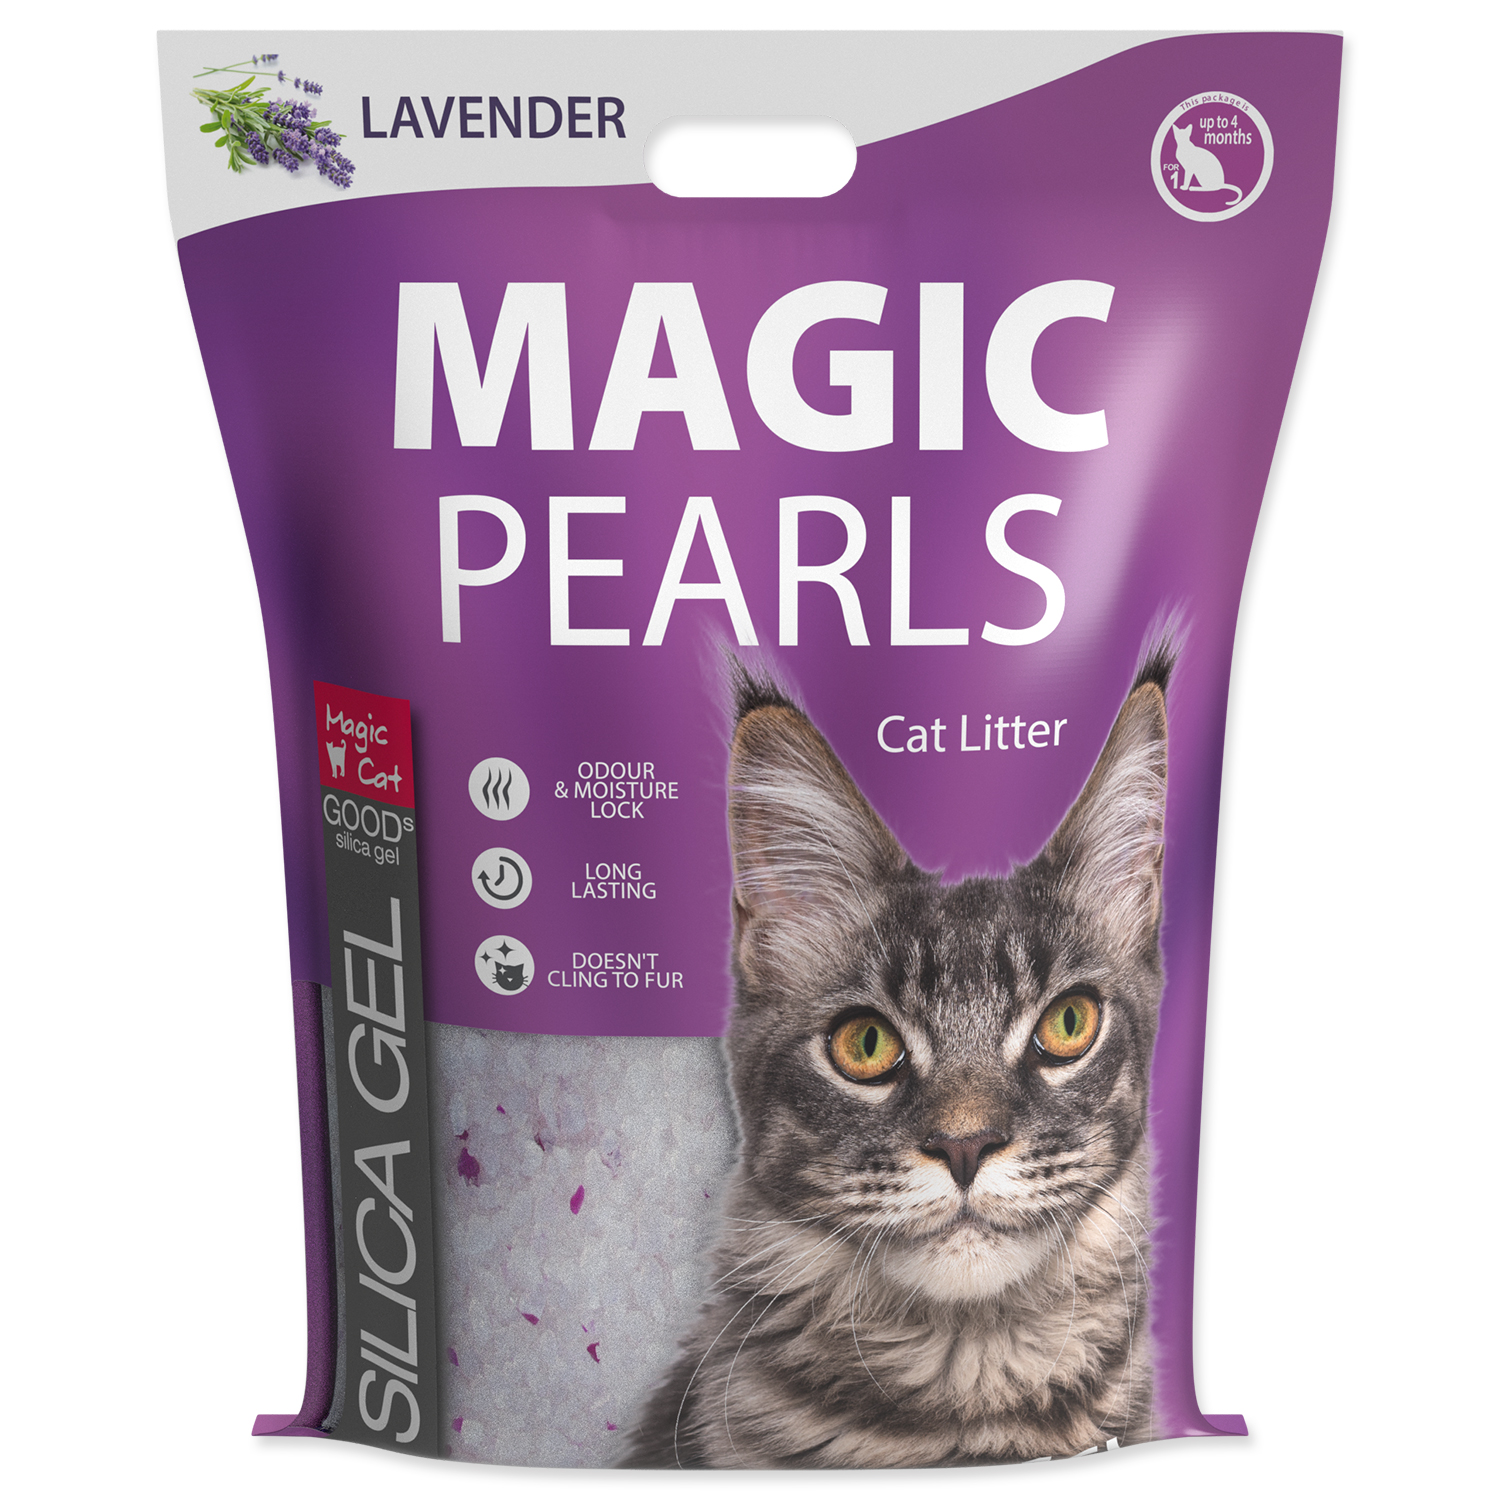 Kočkolit MAGIC PEARLS Lavender